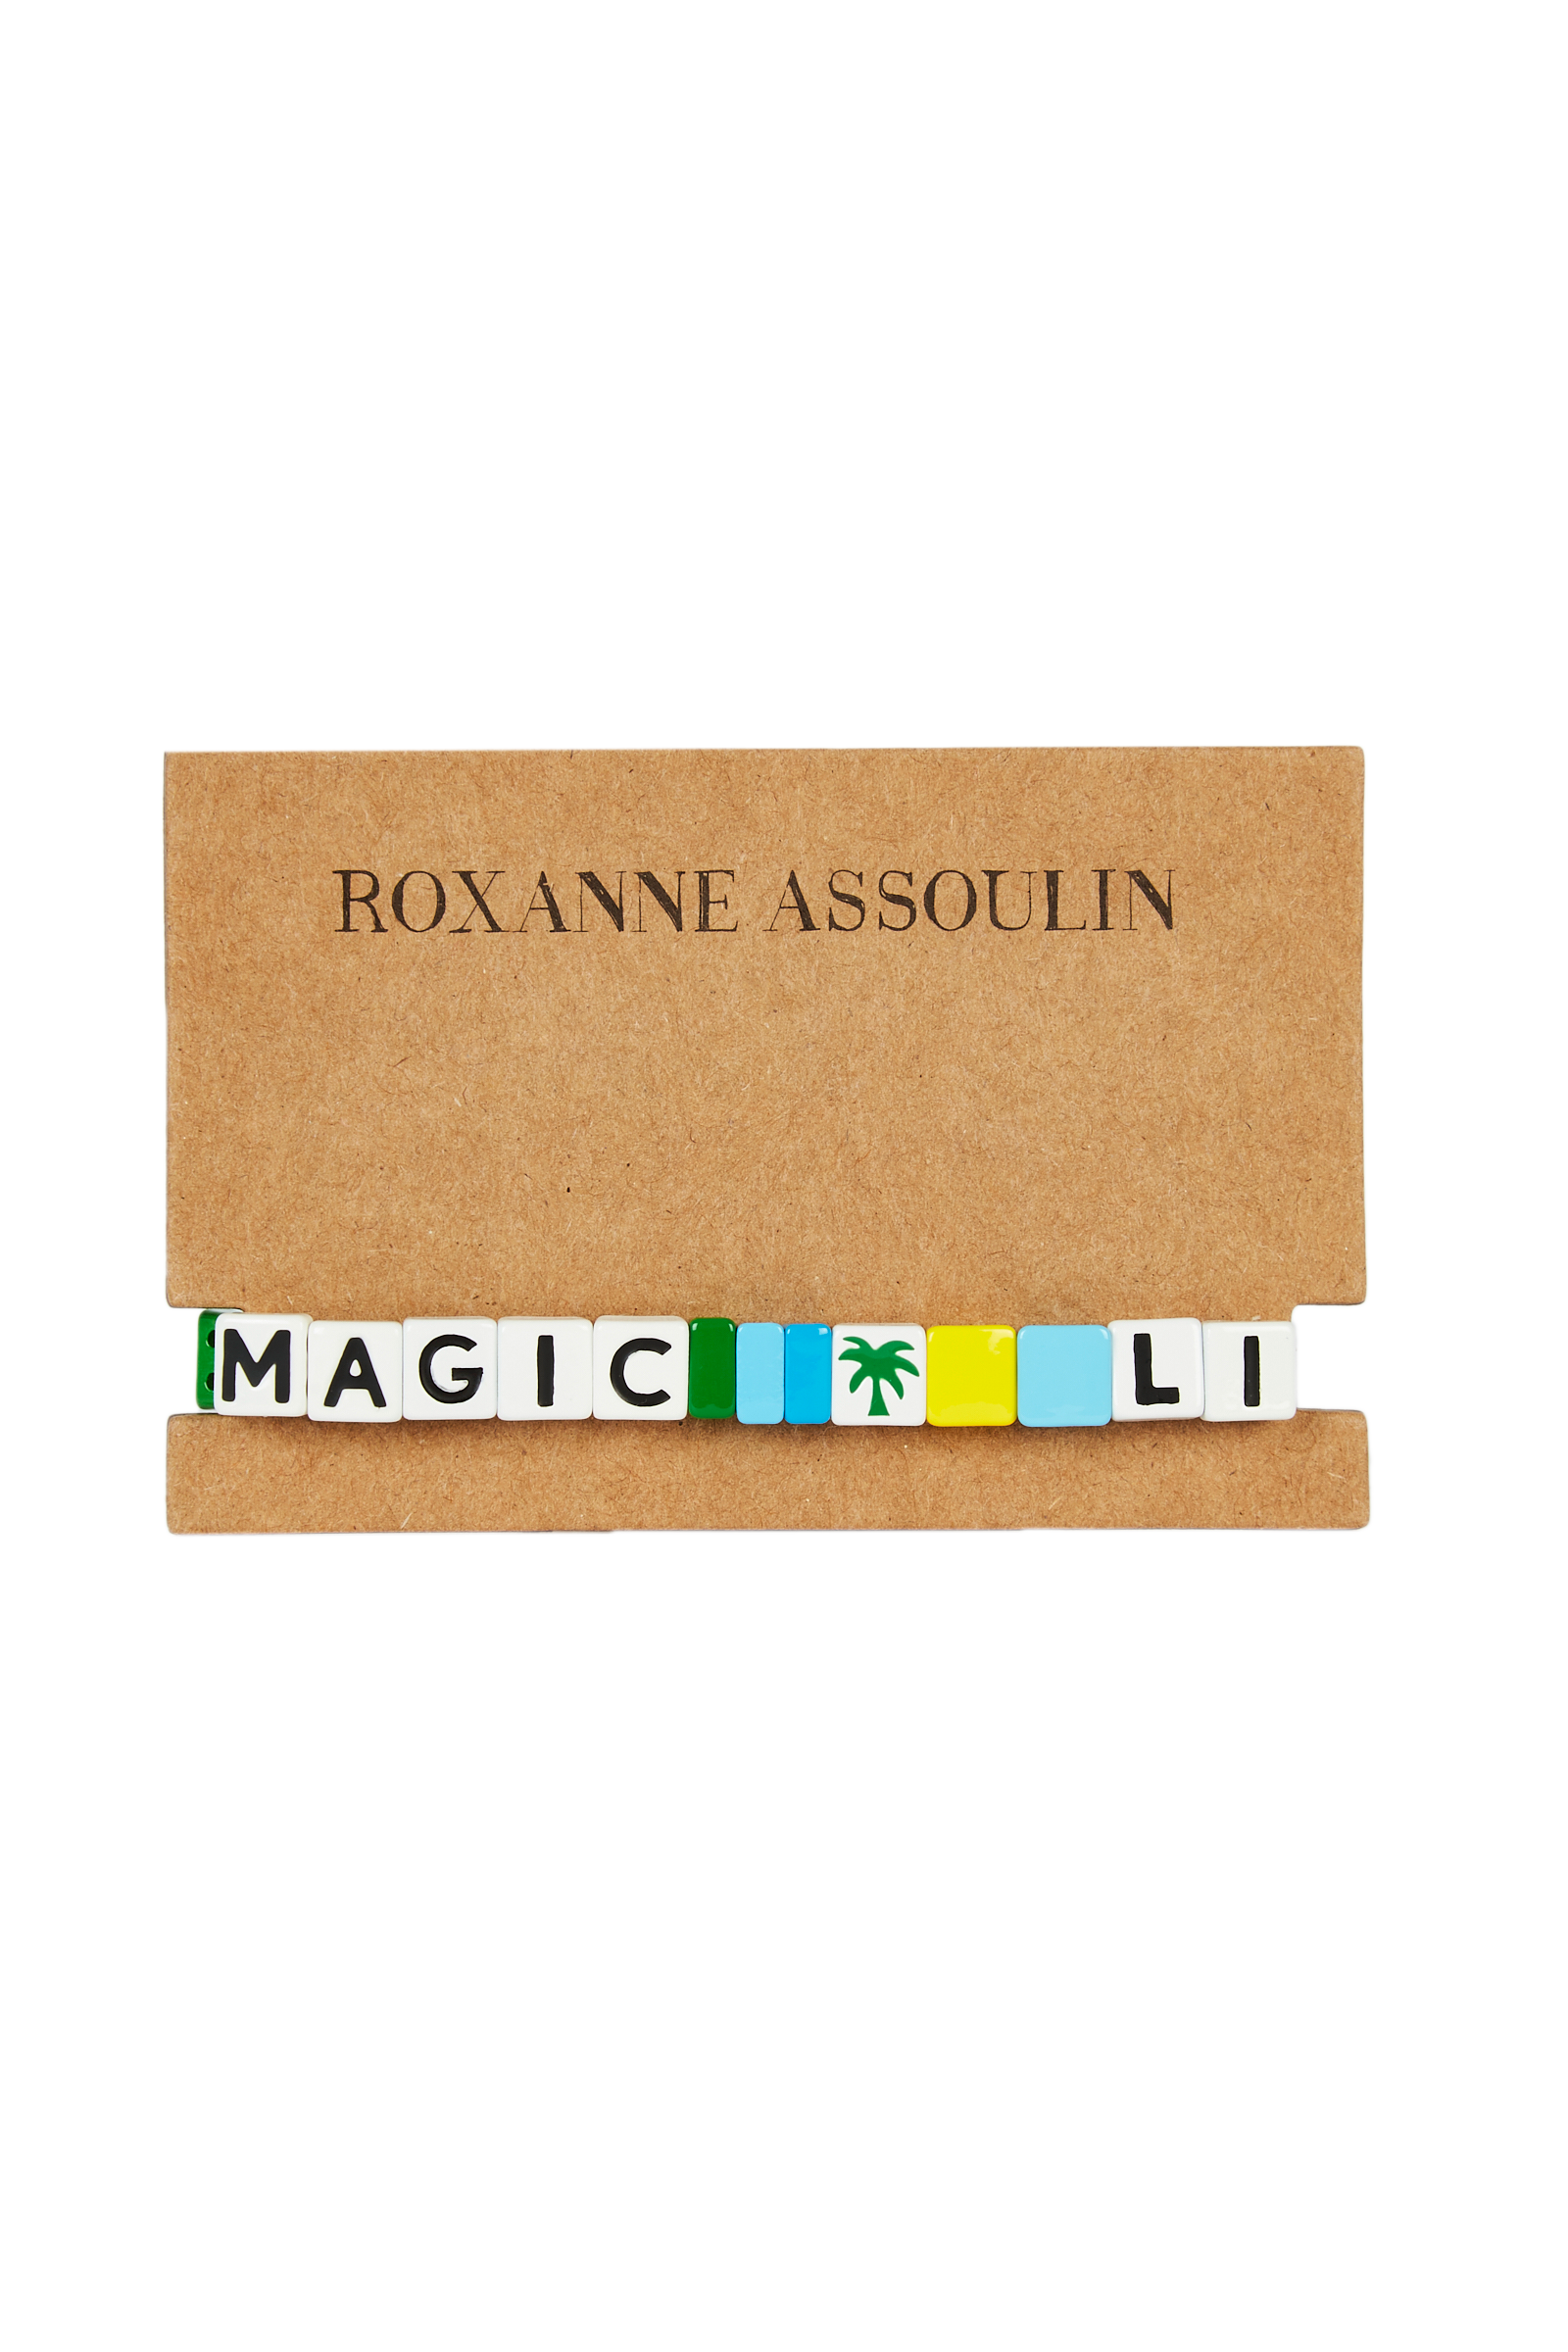 Roxanne Assoulin -  Magic Life Bracelet 